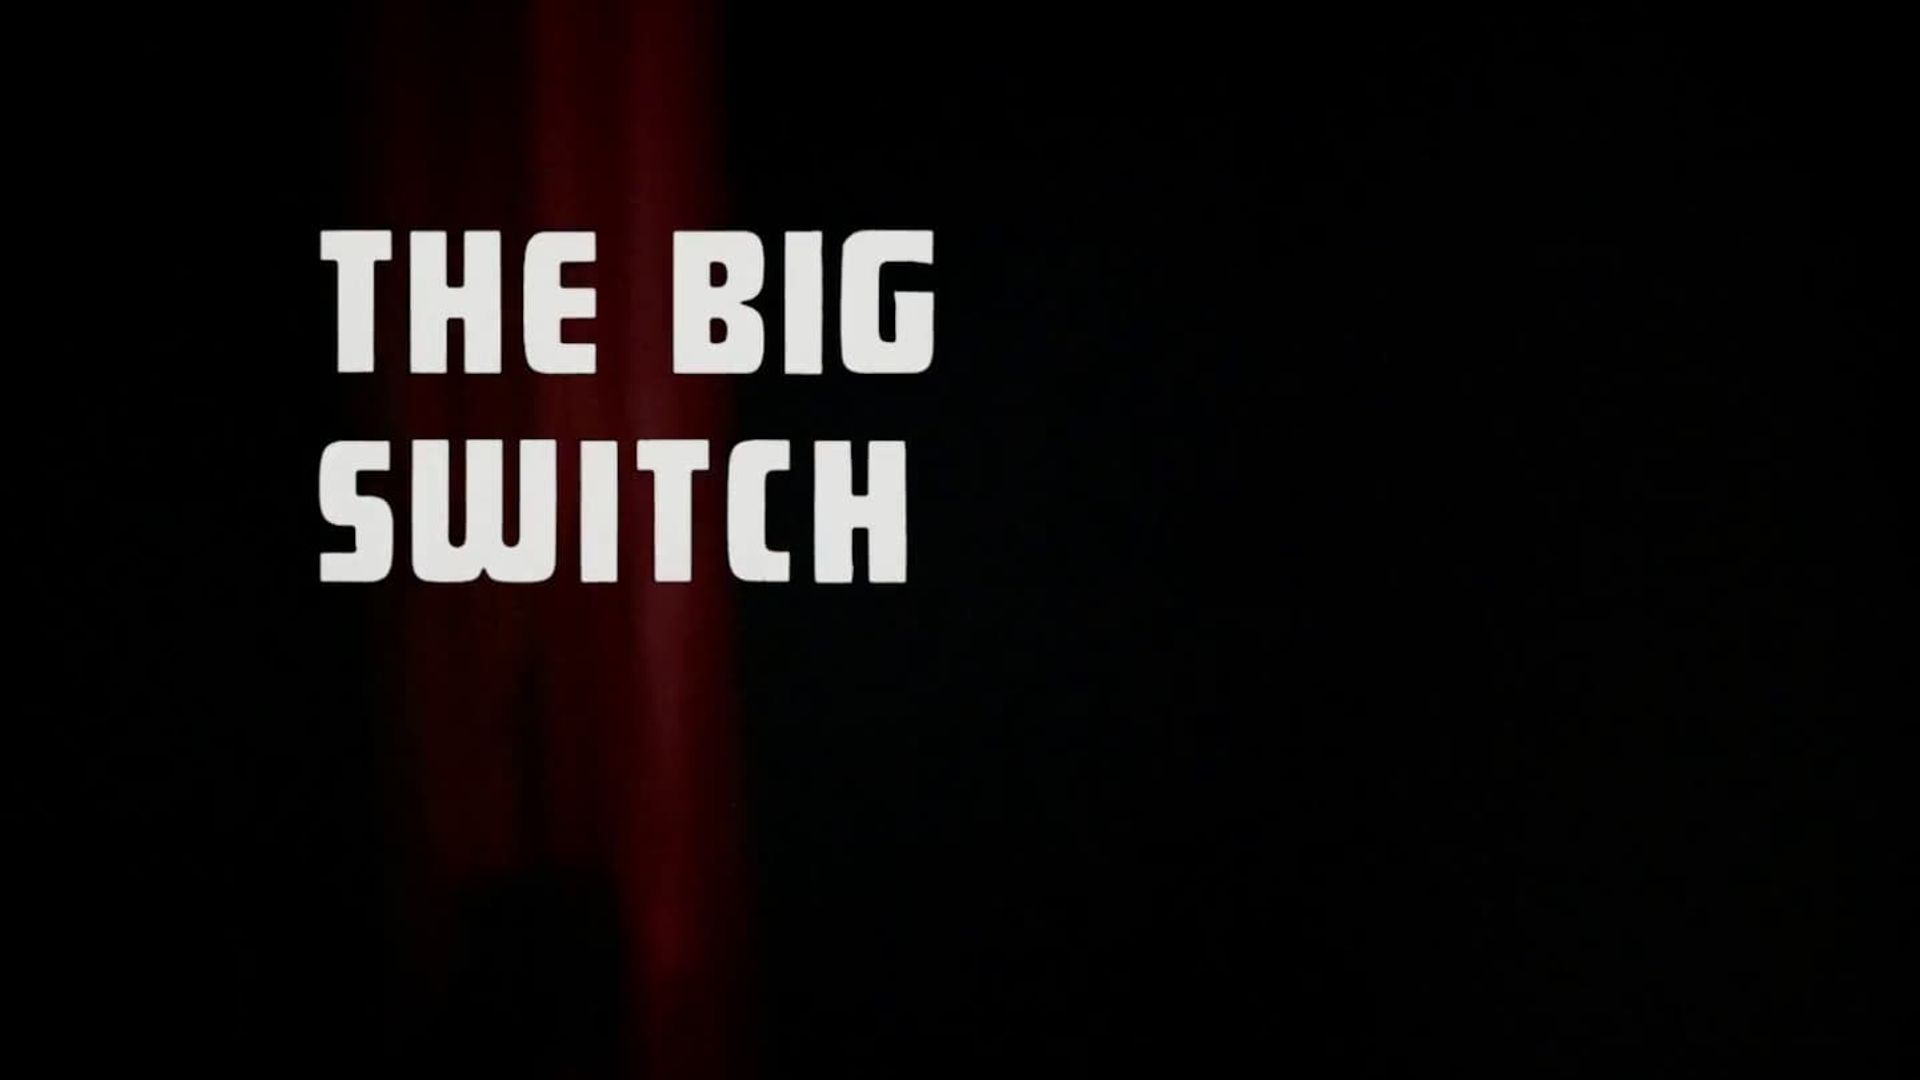 The Big Switch background